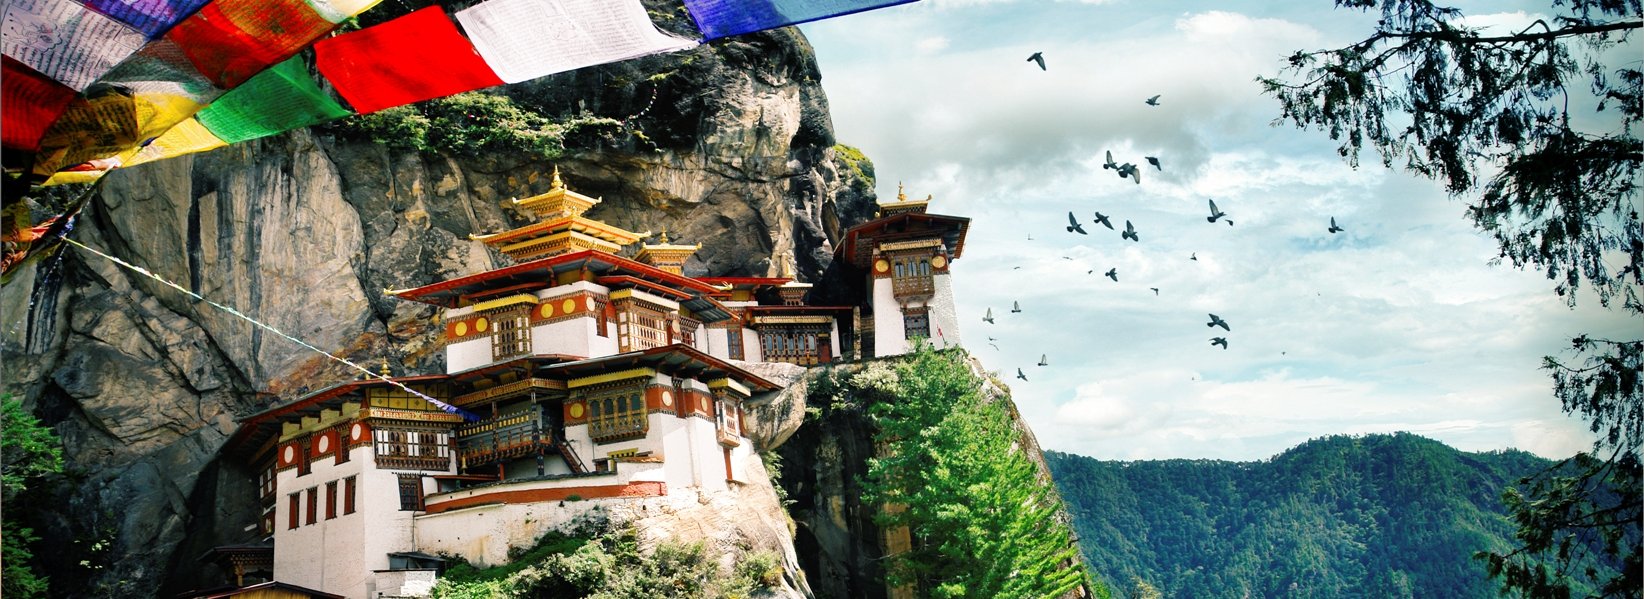 Bhutan's Gross National Happiness 